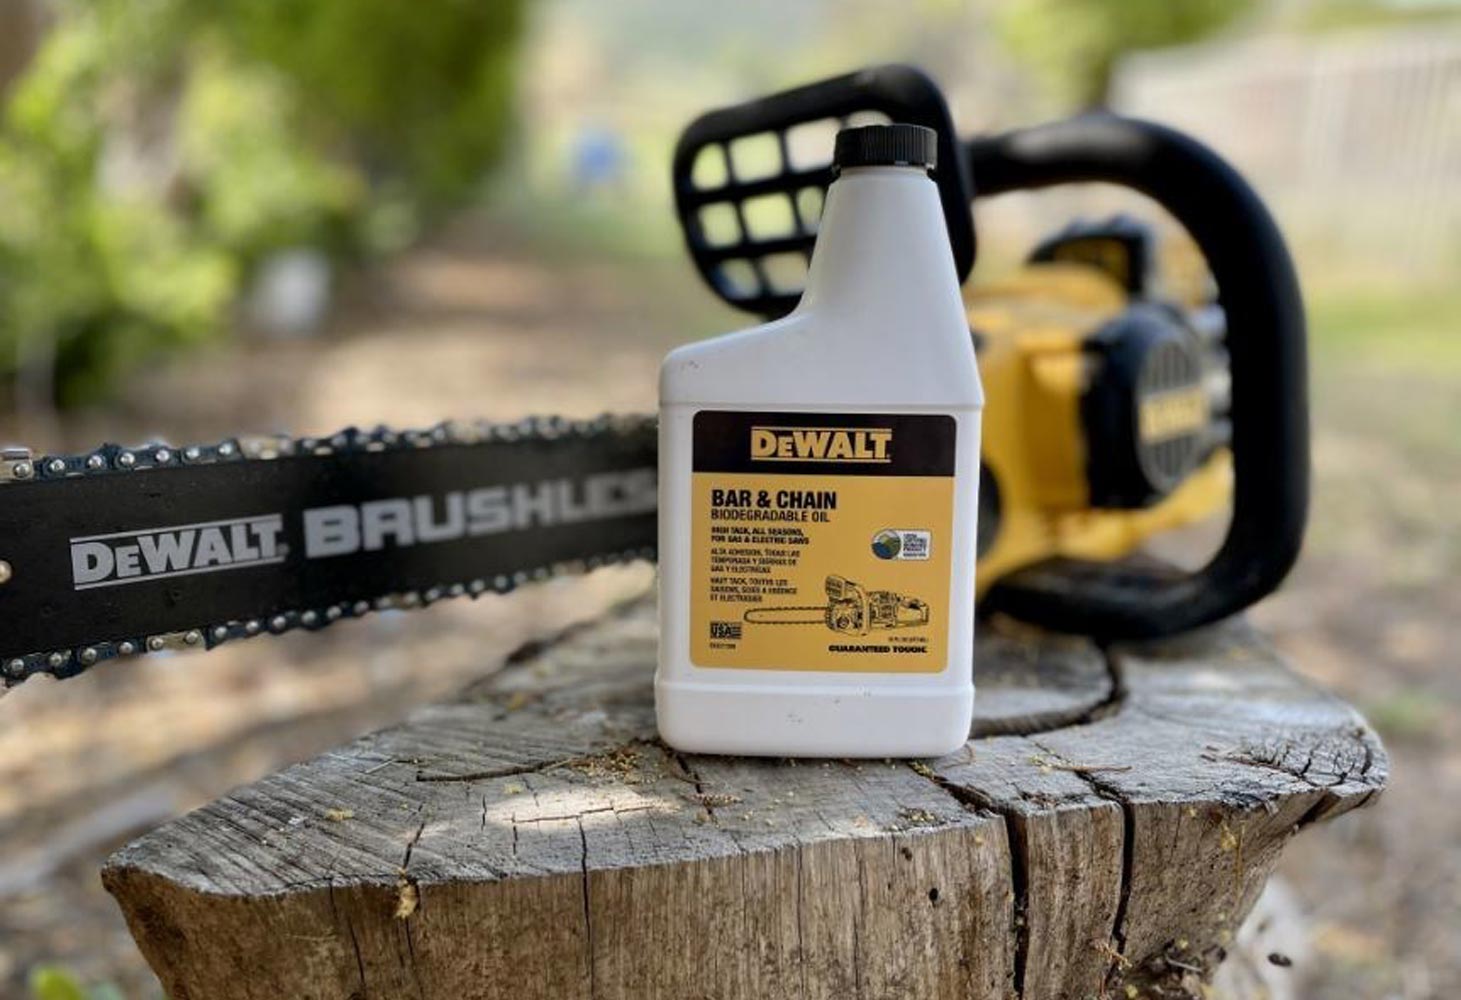 DEWALT announces first-ever biodegradable chain saw oil